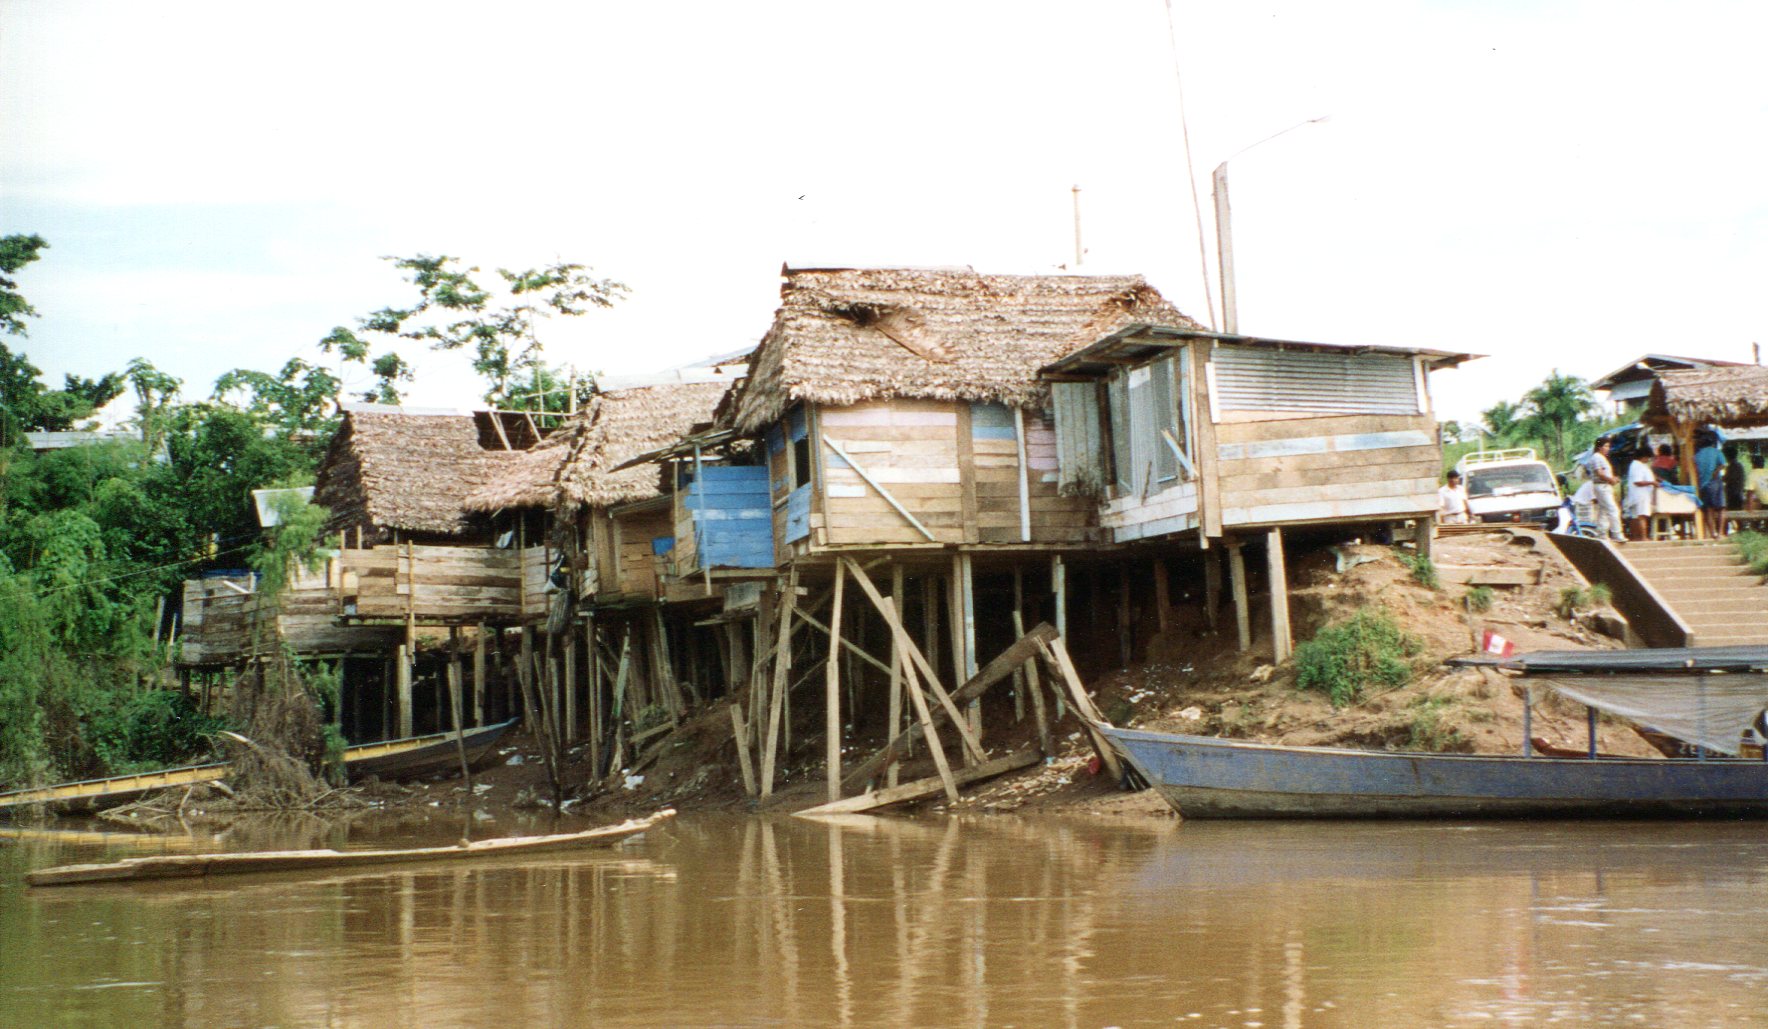 Dwellings along the Rio Tambopata (photo credit - Kim Bartlett, Animal People, Inc.)